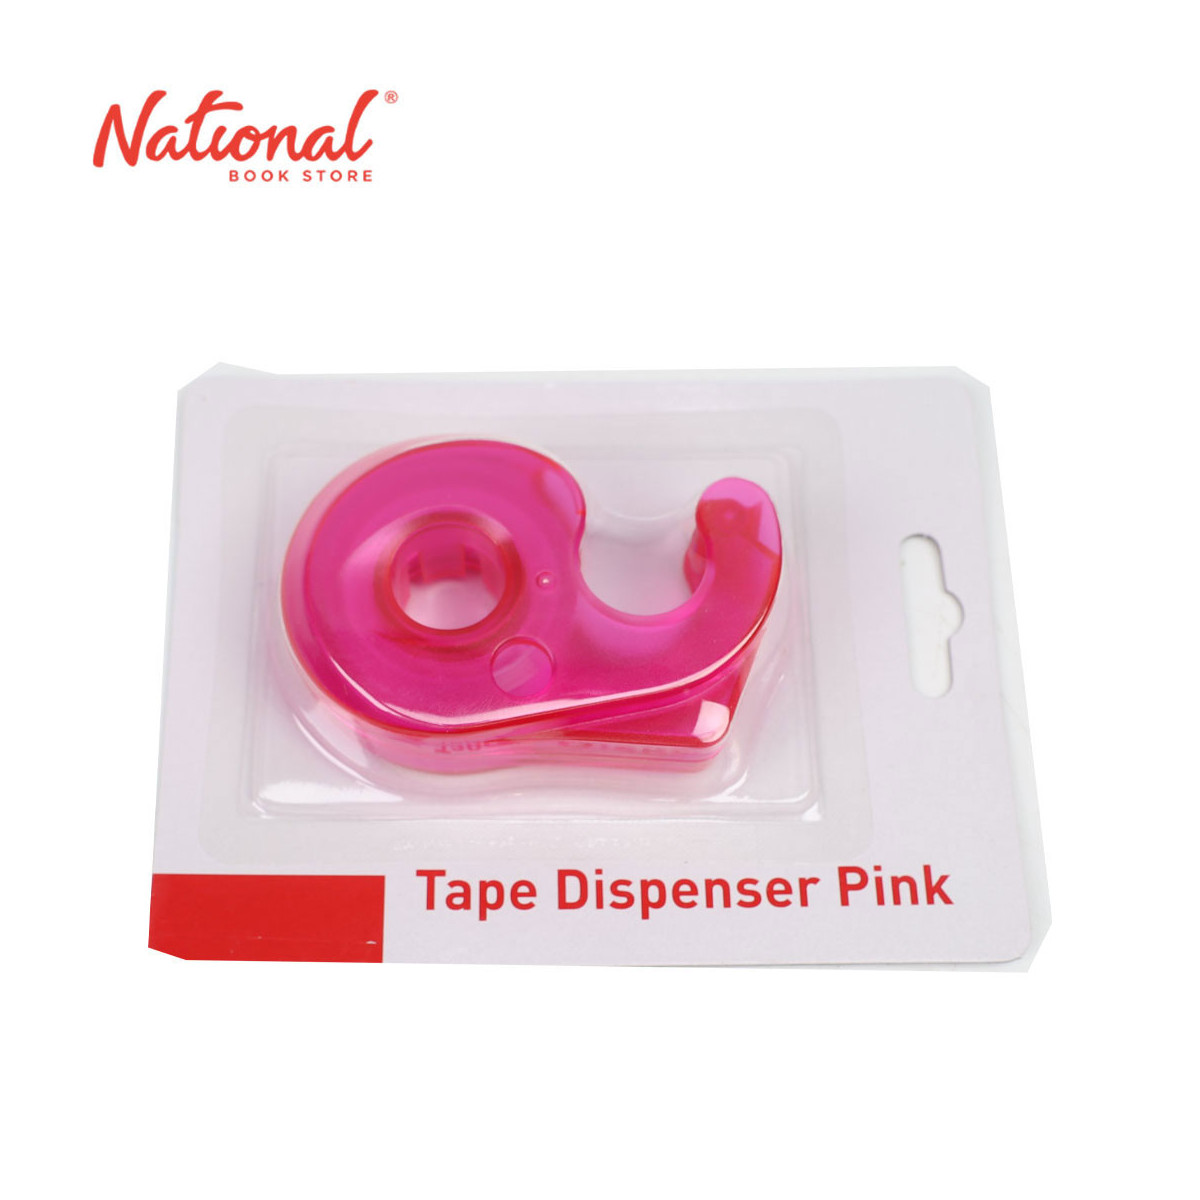 NB Looking Tape Dispenser Svk20T037, Pink Handy - Office Supplies